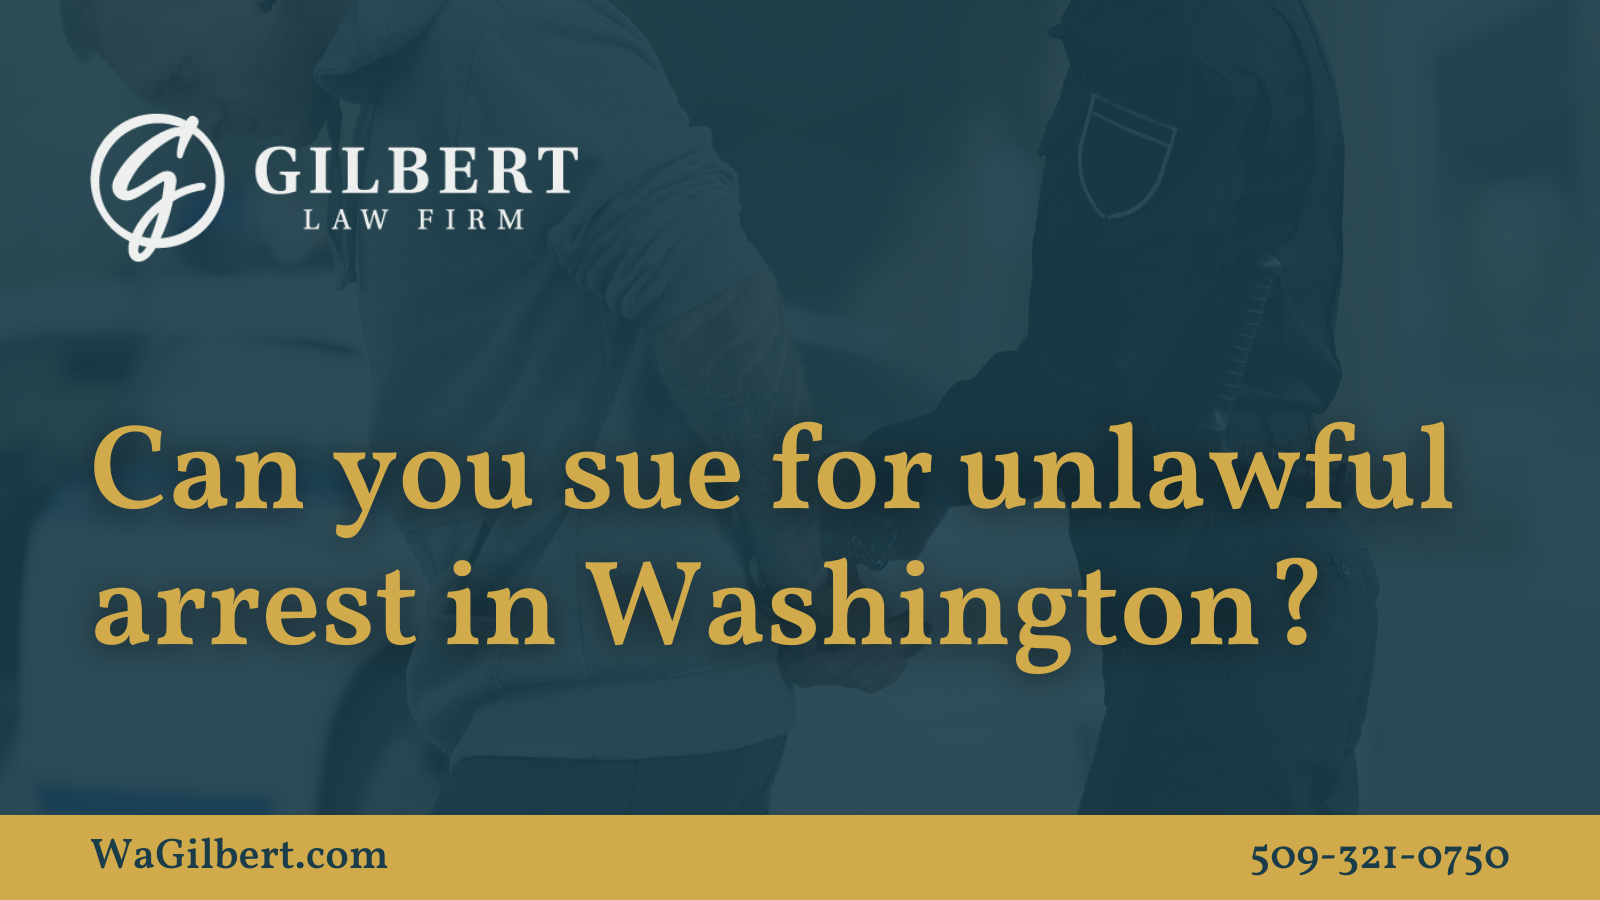 Can you sue for unlawful arrest in Washington| Gilbert Law Firm Spokane Washington